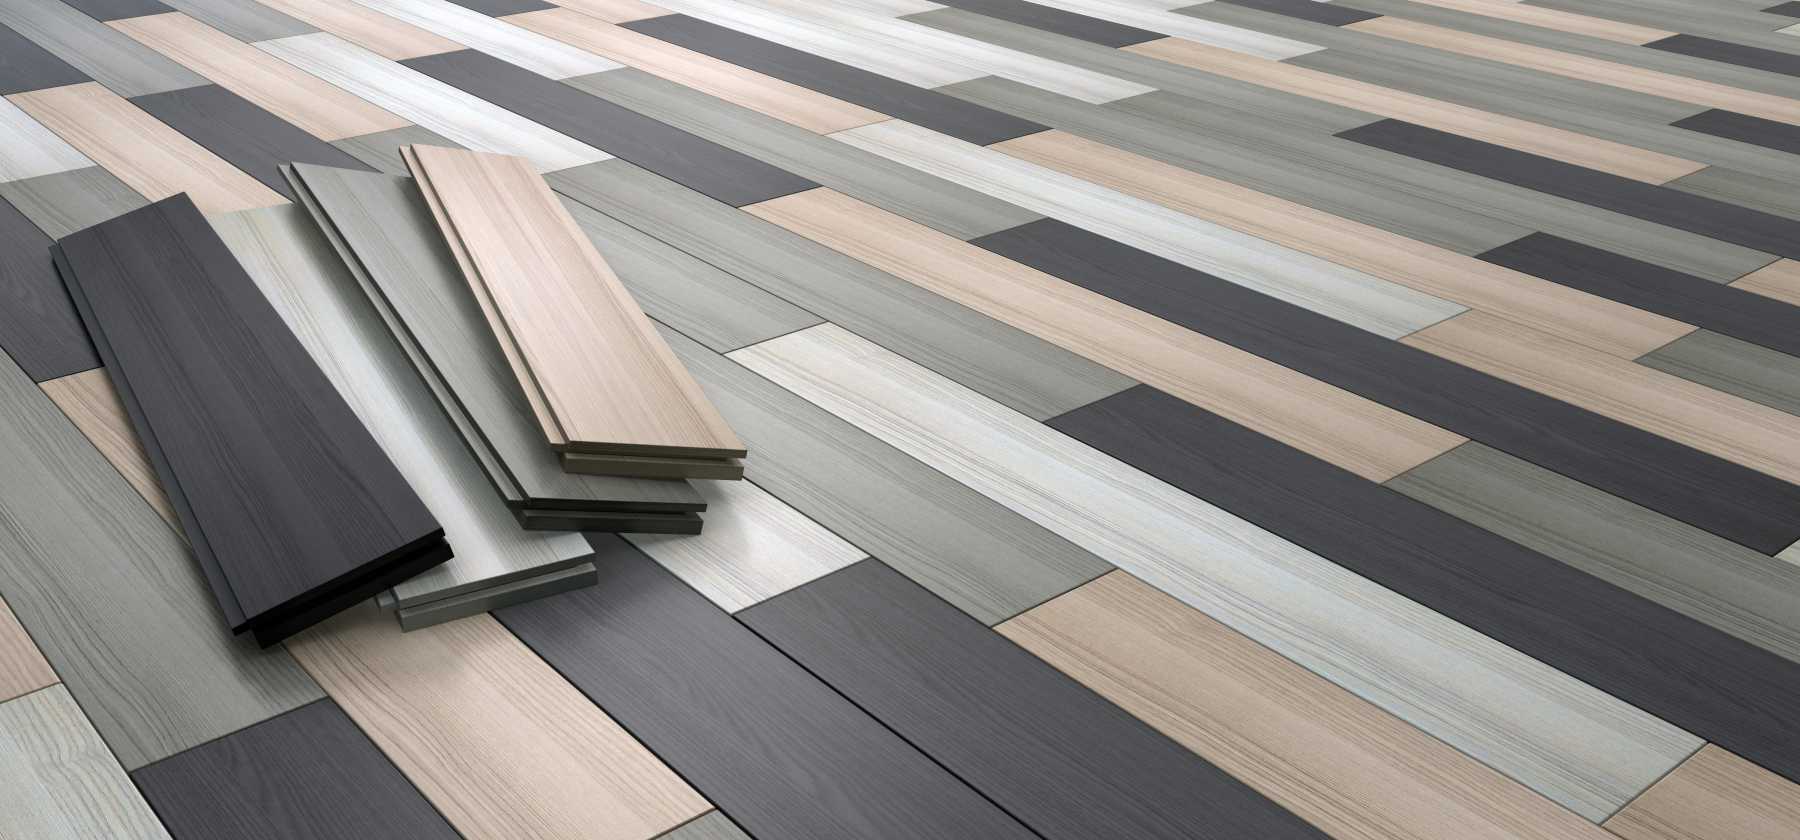 Bulk Buy Custom silicone mat for Kitchen Counter Wholesale - ZSR